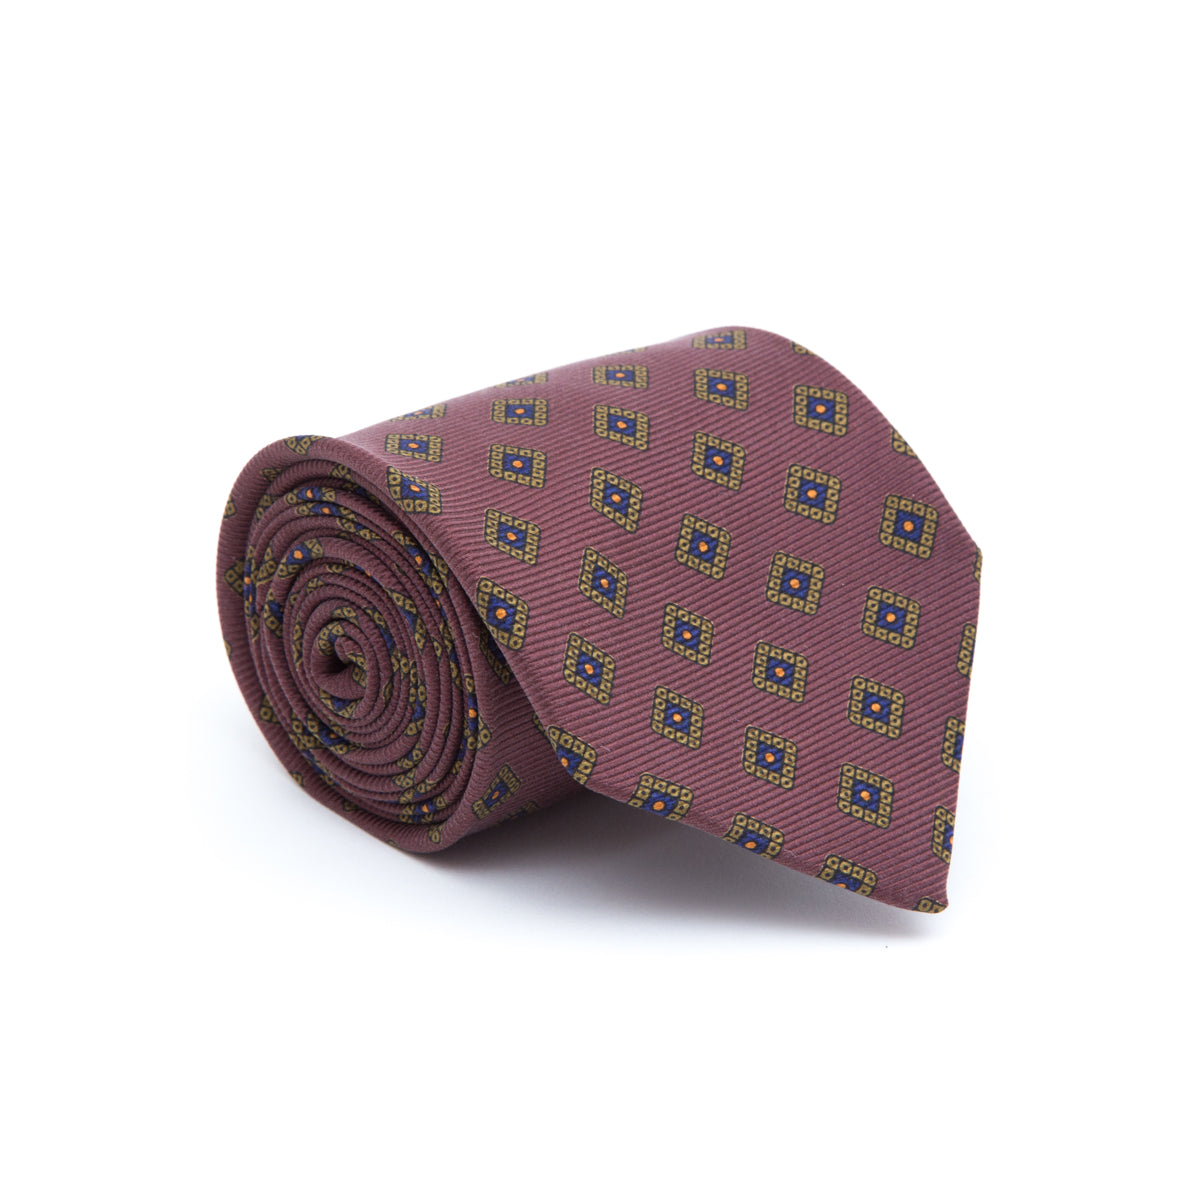 Chestnut rhombus fantasy tie